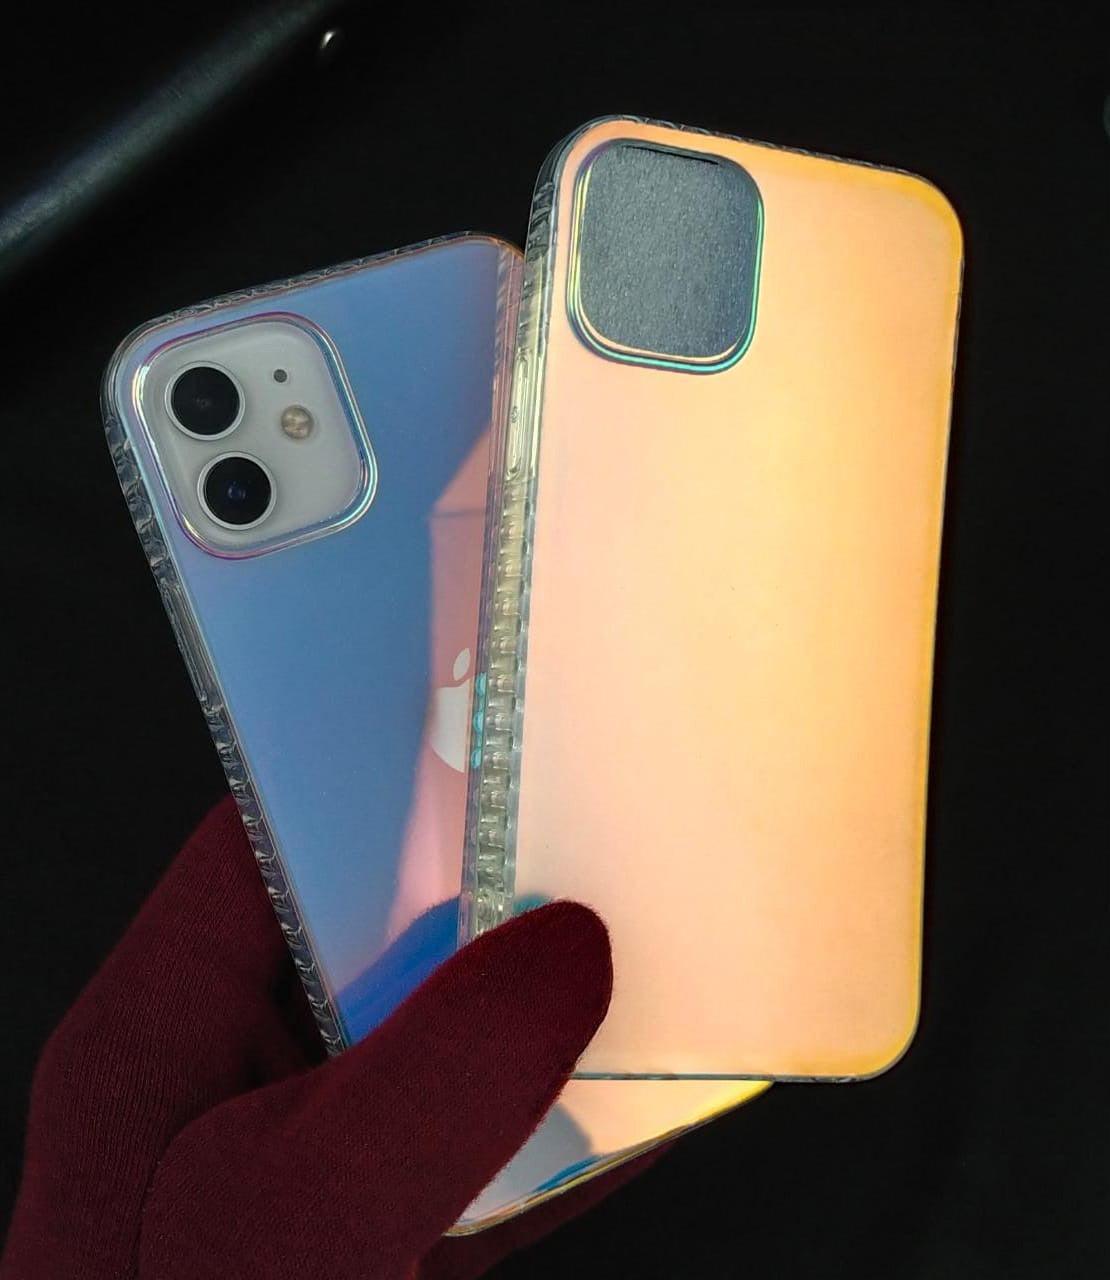 23101 Redmi's Transparent Shiny hard case |  Back Cover Case | Camera Protection Back Cover Case | Slim & Protective Design | Anti-Slip Grip (Transparent) | Matte & Shiny Hard Cover | For Man & Woman Cover